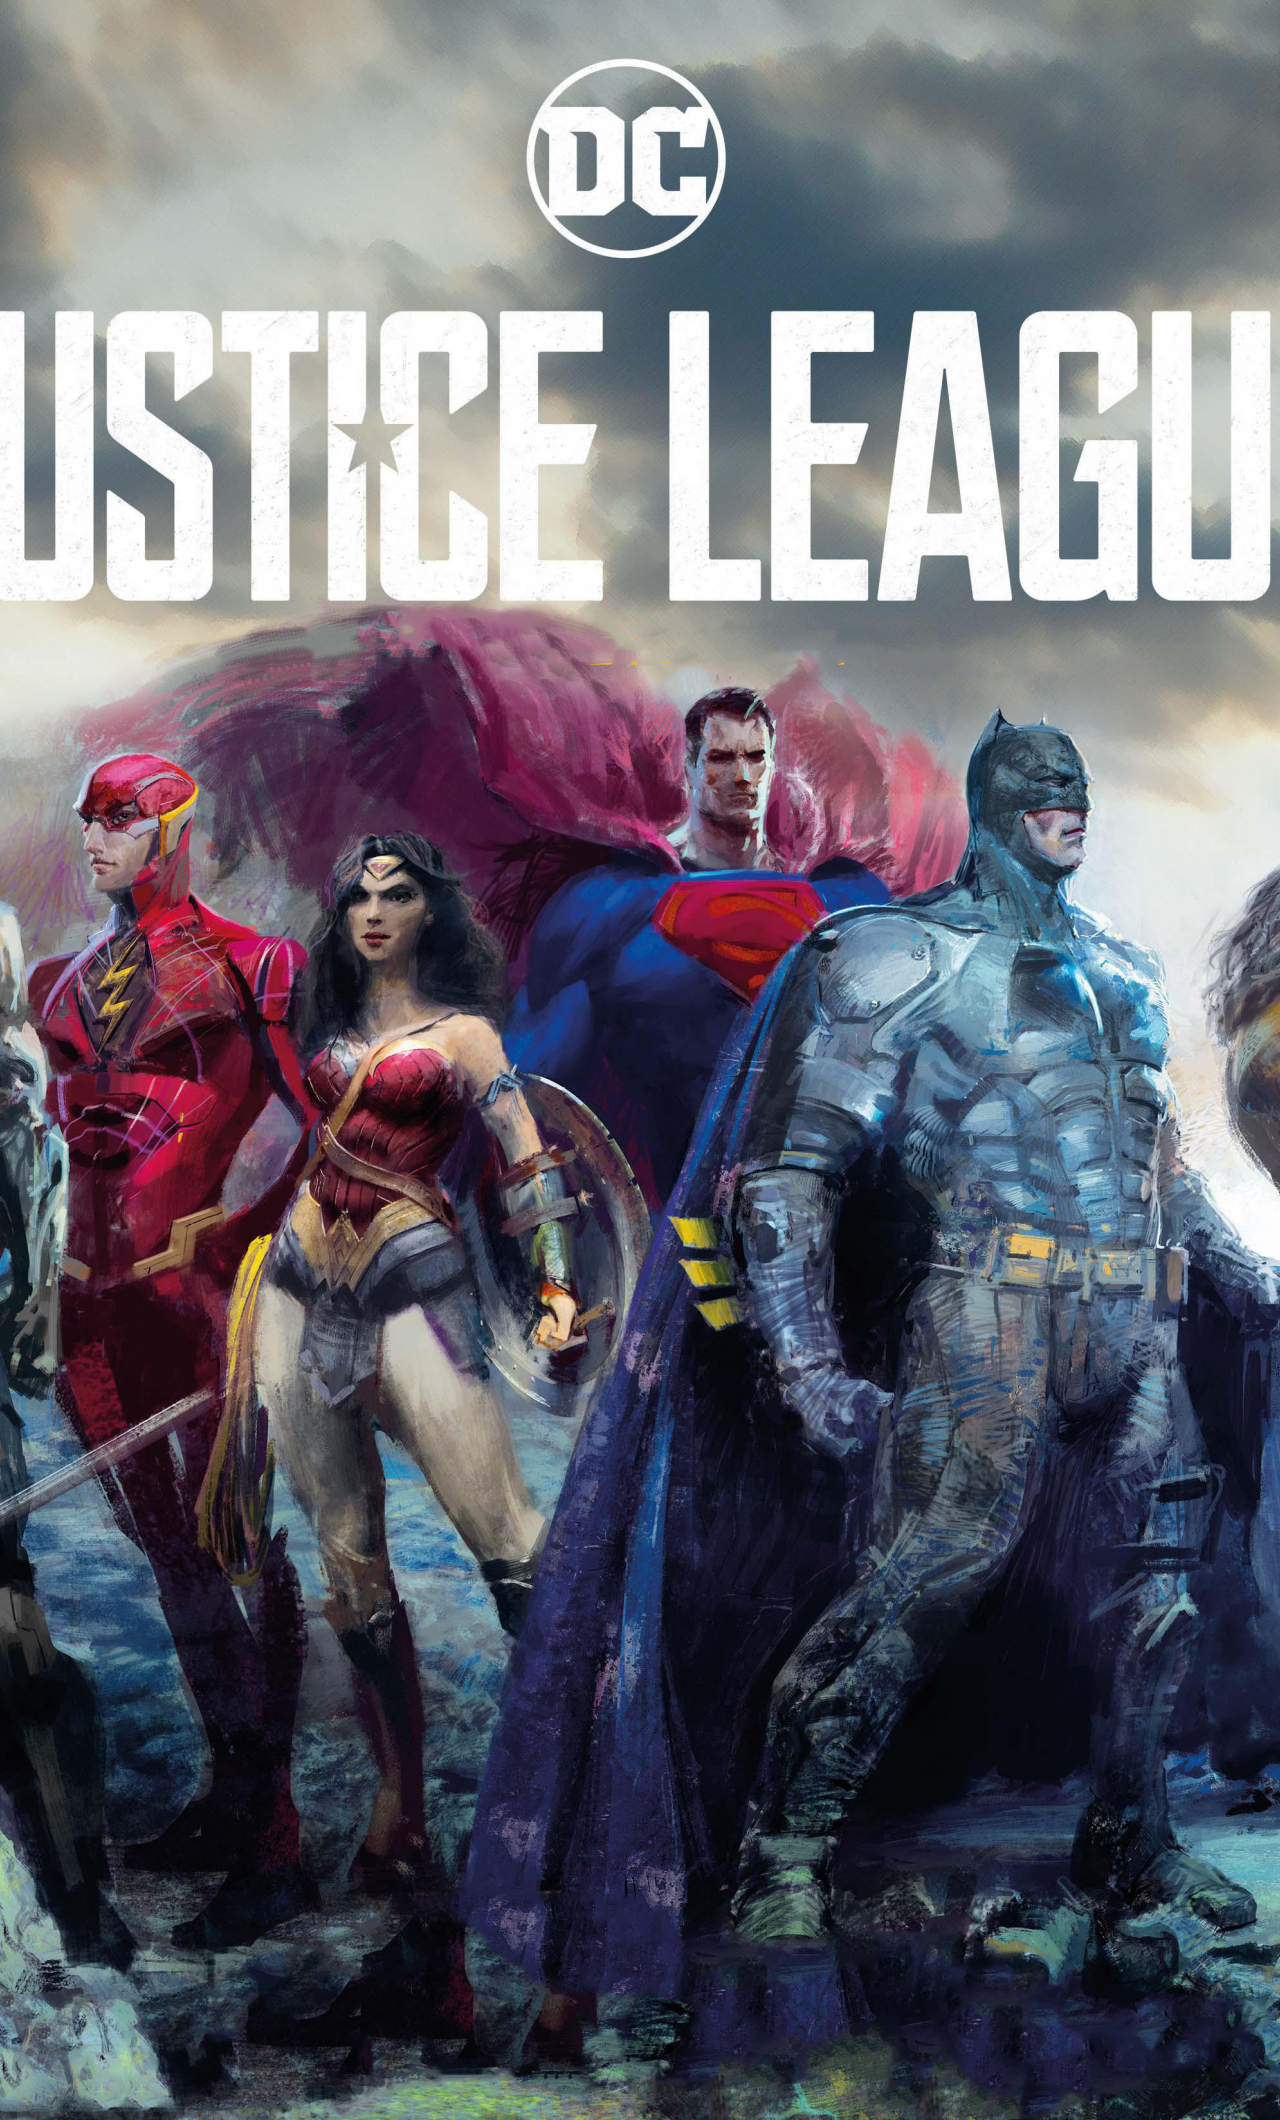 Download wallpaper 1280x2120 justice league, movie, fan artwork, batman,  superman, wonder woman, iphone 6 plus, 1280x2120 hd background, 441